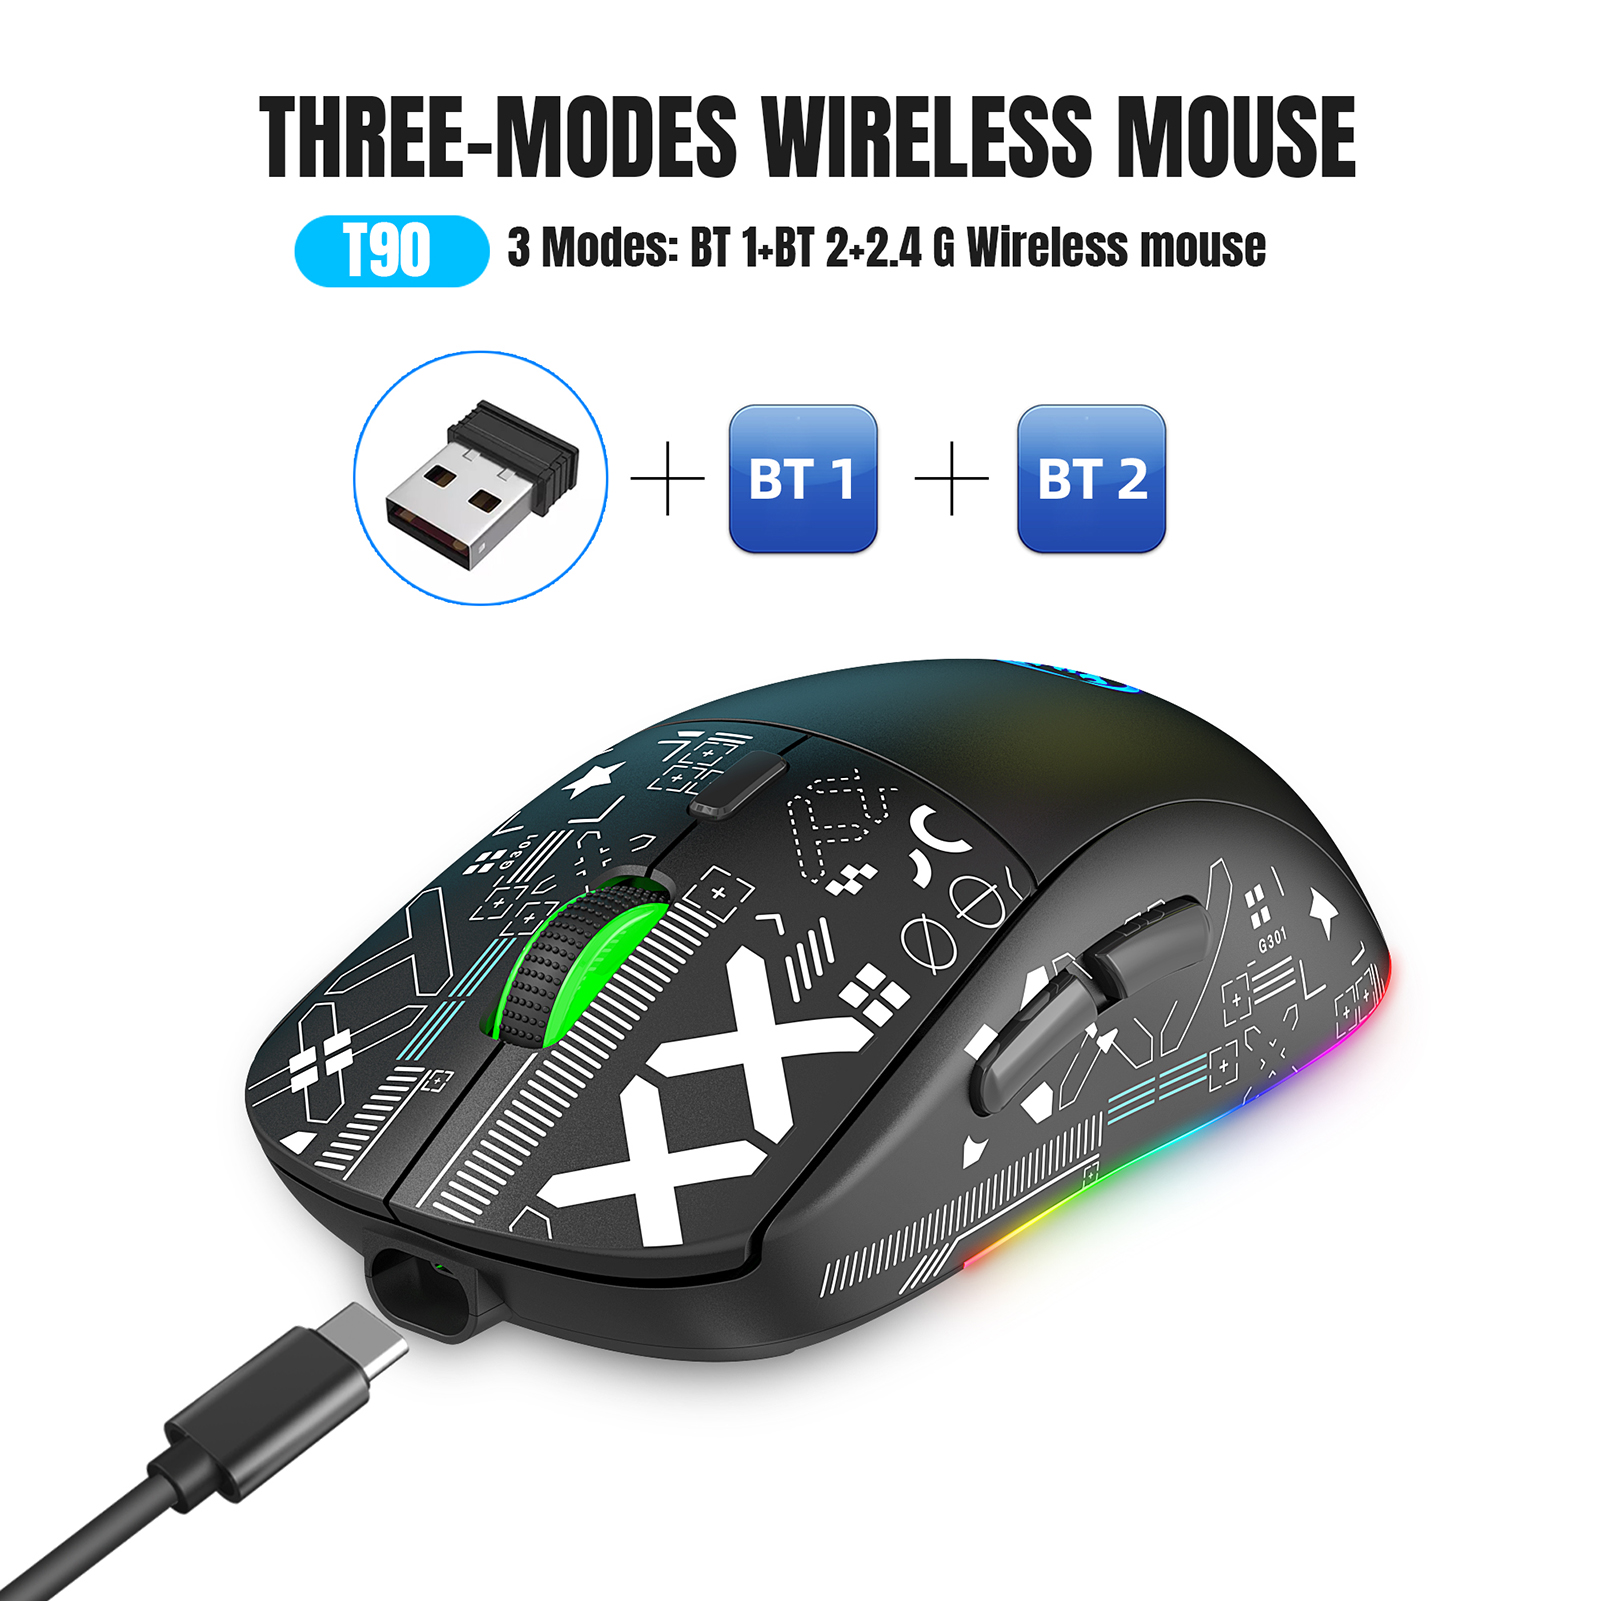 HXSJ T66 Ergonomic 2.4G Wireless Gaming Mouse with RGB Lighting